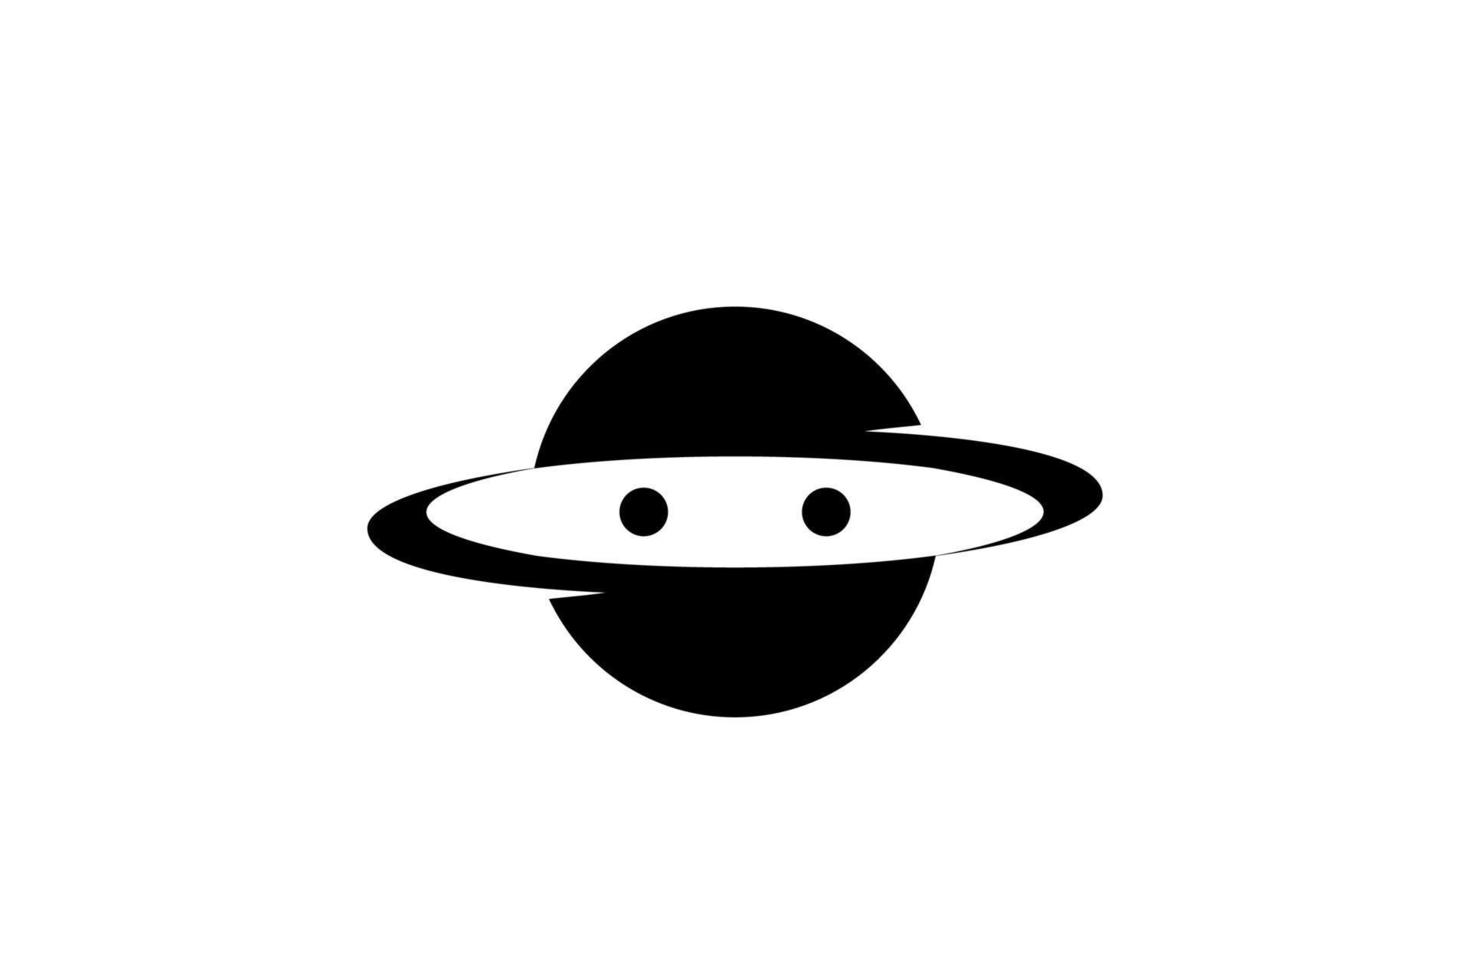 nero bianca globo ufo alieno ninja logo vettore